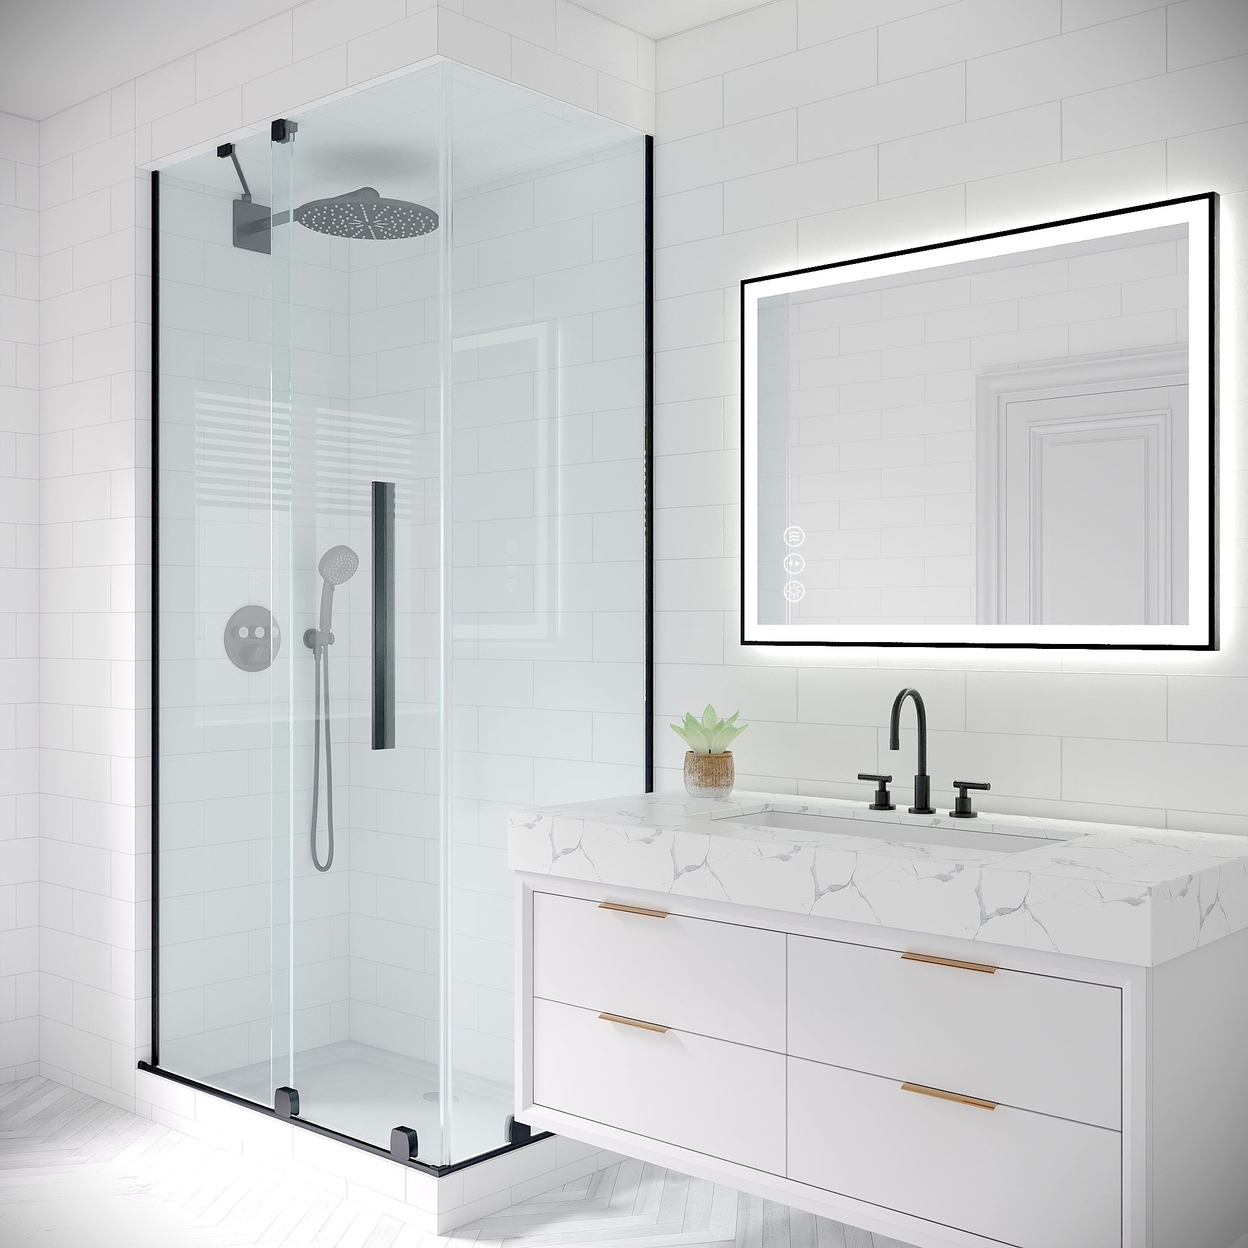 Apex-Noir 28x36 Framed LED Lighted Bathroom Mirror